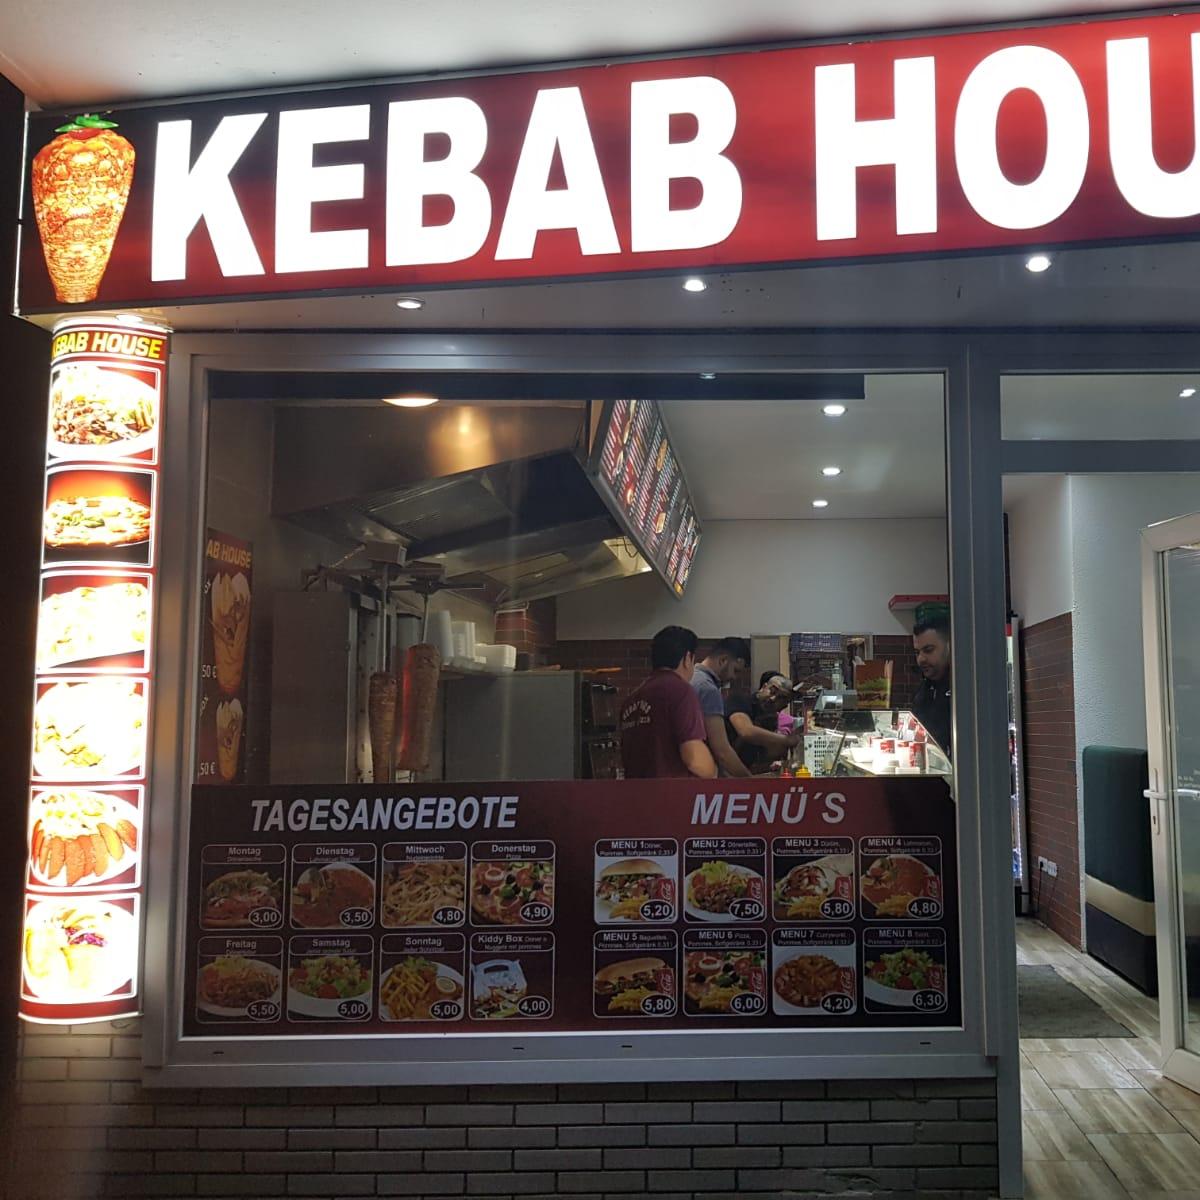 Restaurant "Kebab House" in Dortmund